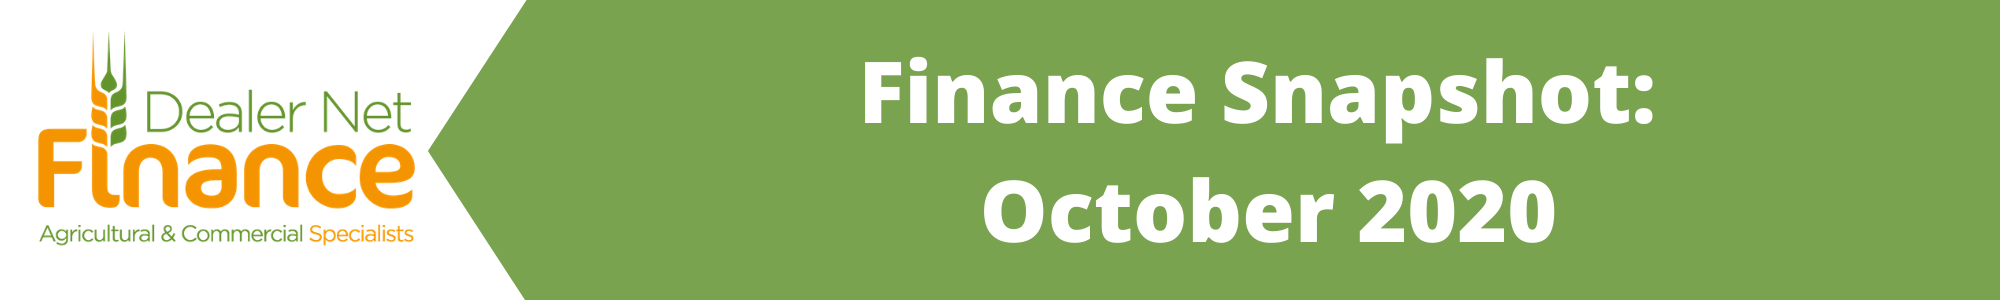 Dealer Net Finance Snapshot - October 2020